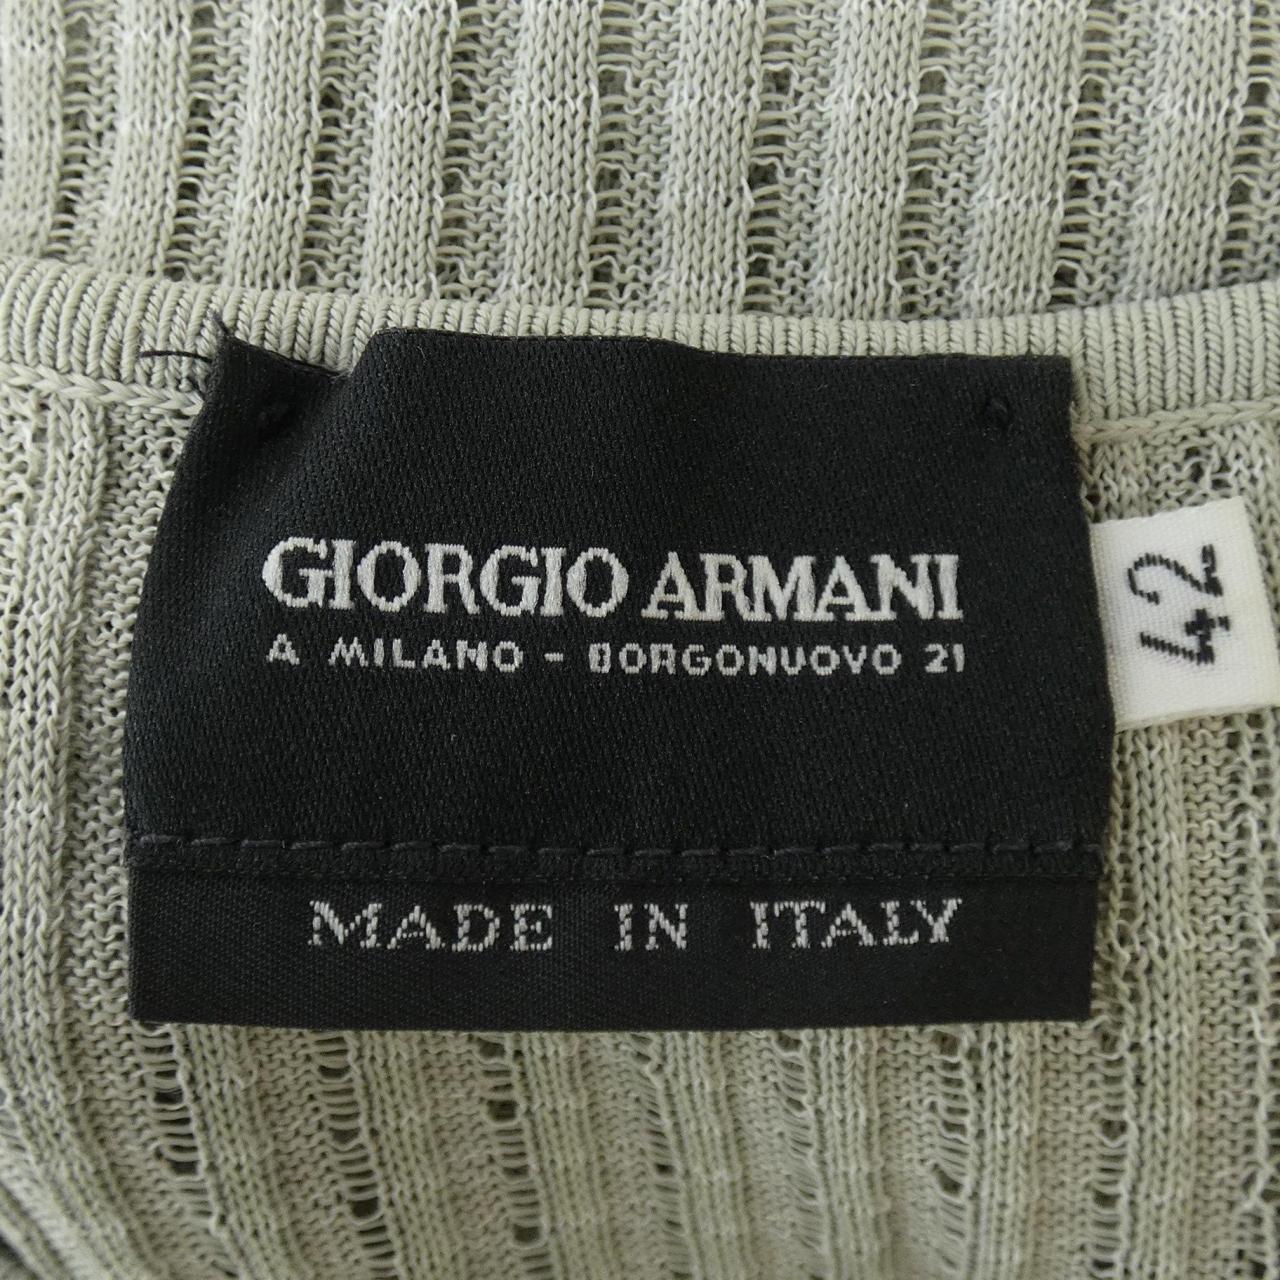 Giorgio Armani GIORGIO ARMANI Tops